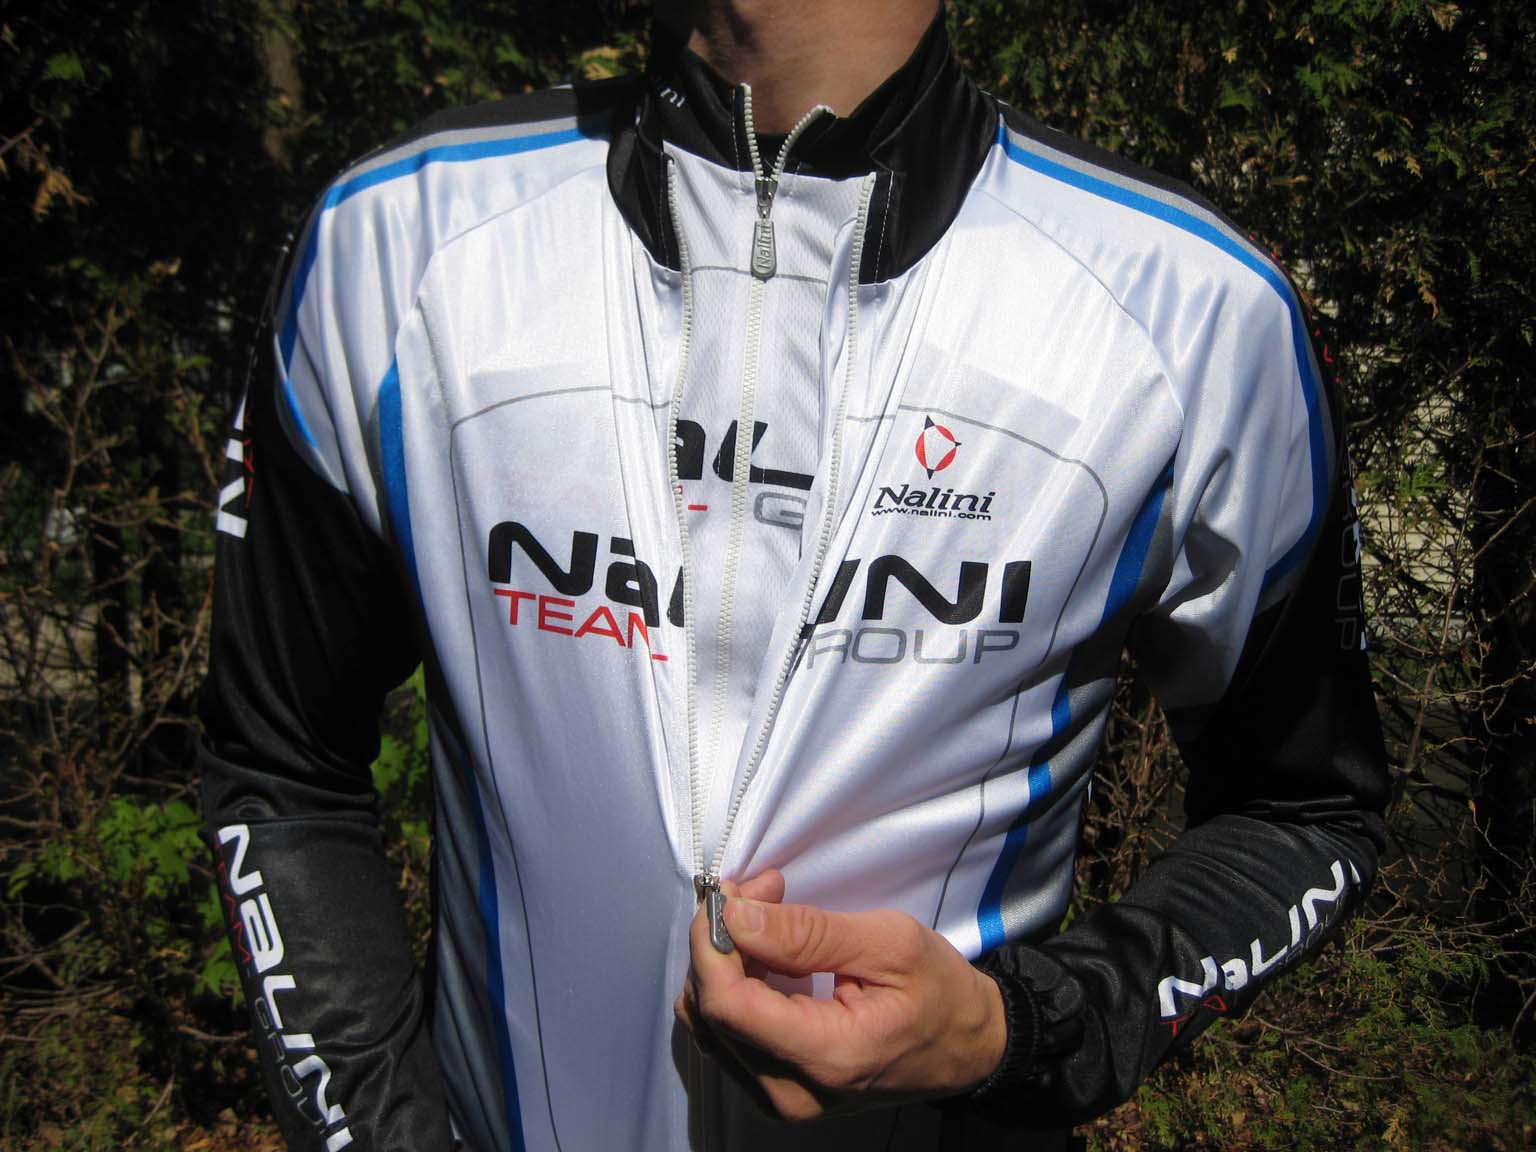 Nalini Custom Cyclocross Clothing